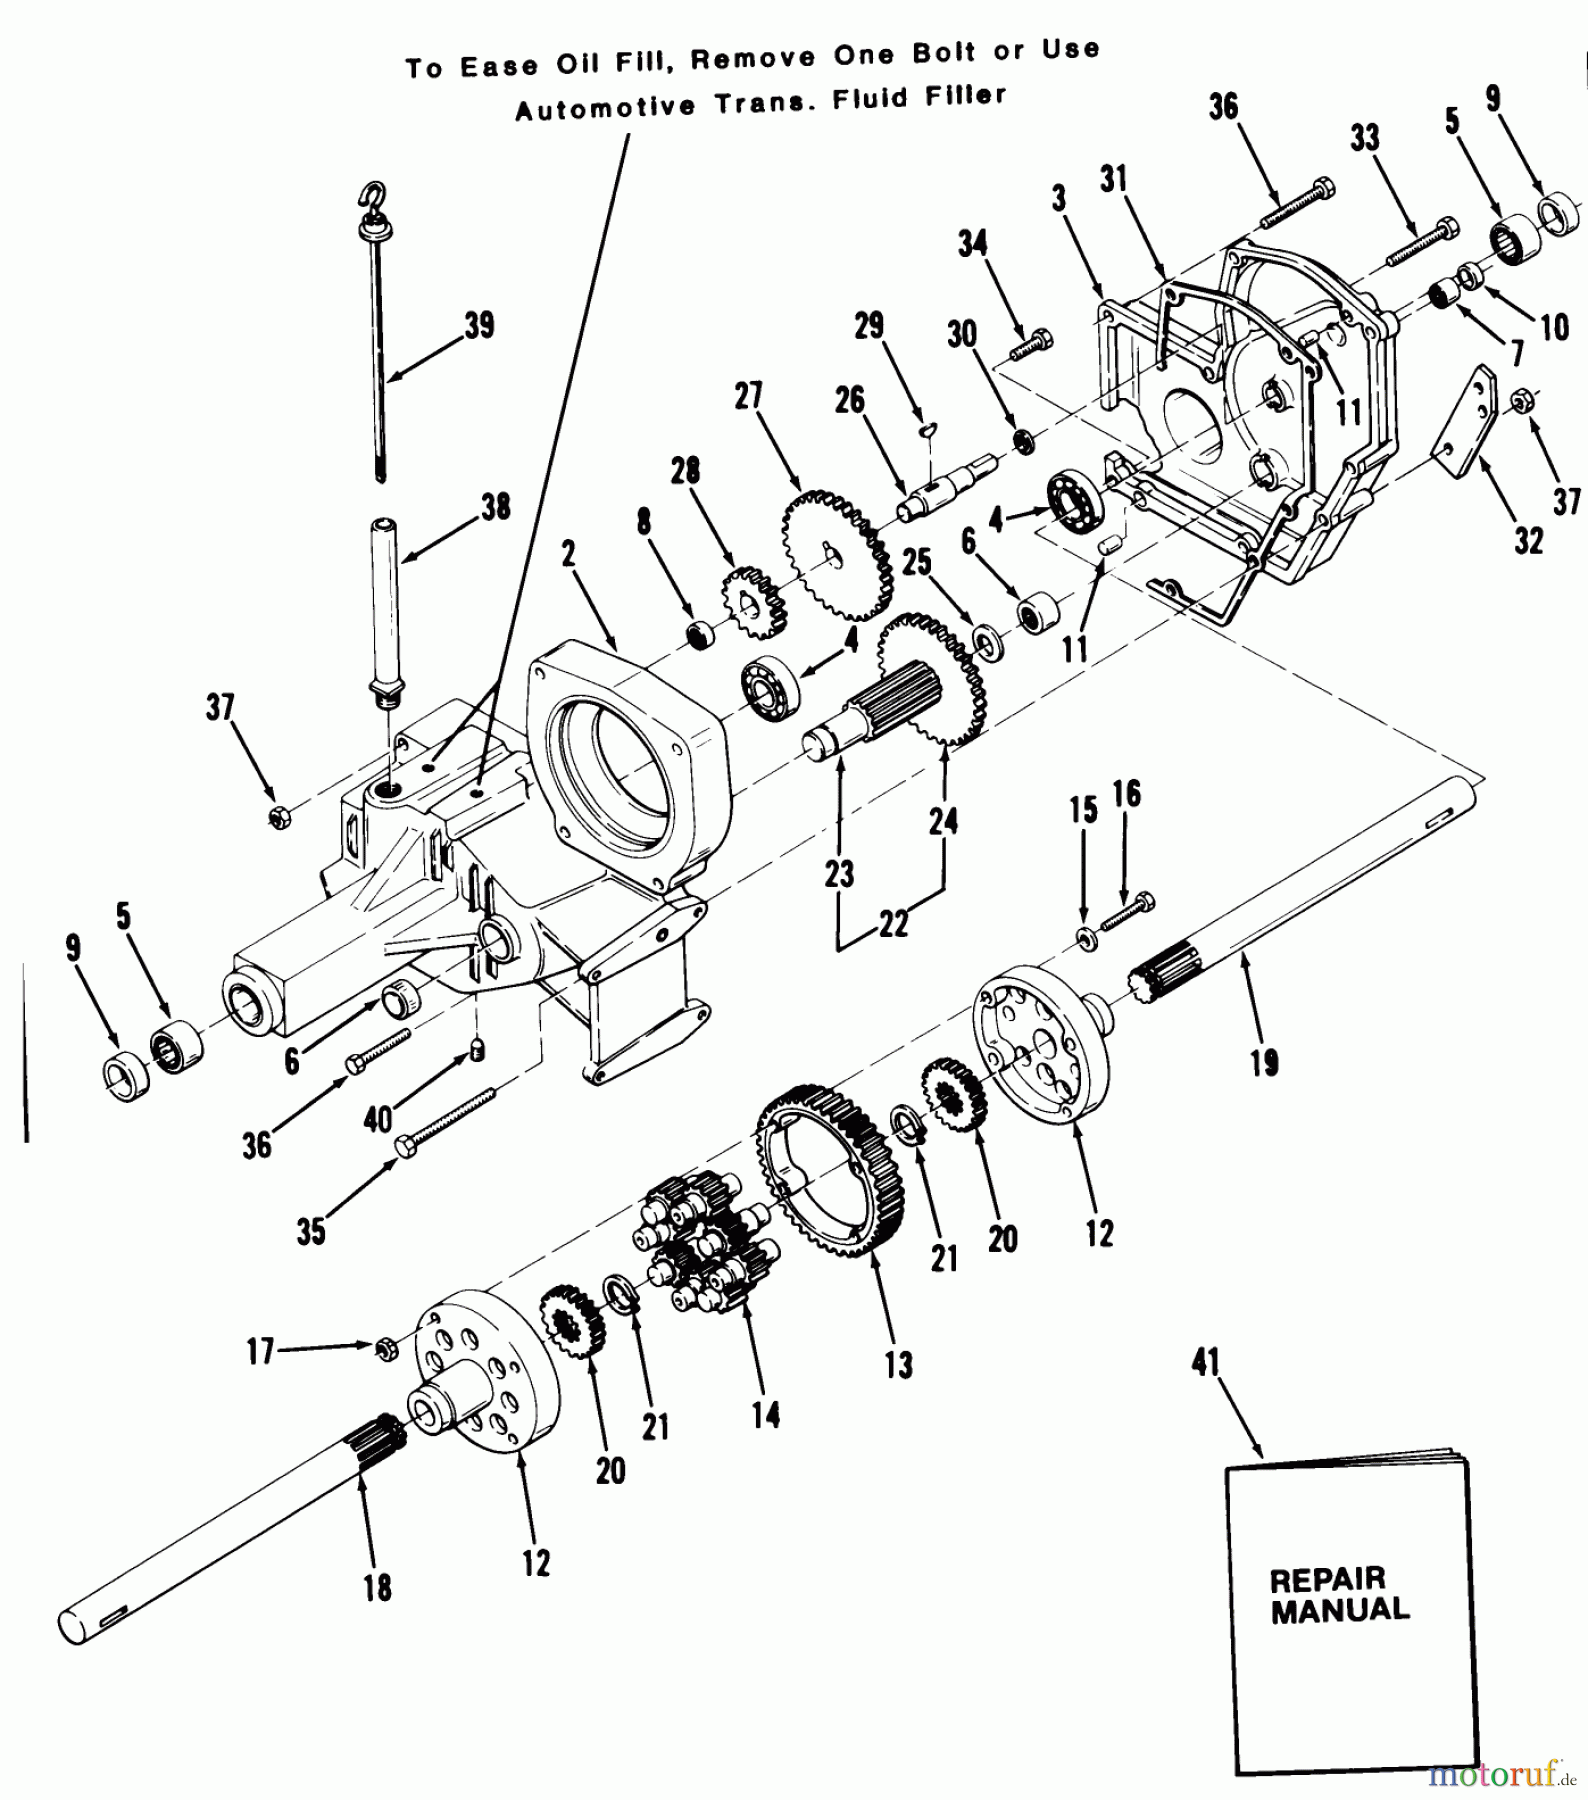  Toro Neu Mowers, Lawn & Garden Tractor Seite 1 11-10K802 (C-105) - Toro C-105 8-Speed Tractor, 1984 TRANSAXLE